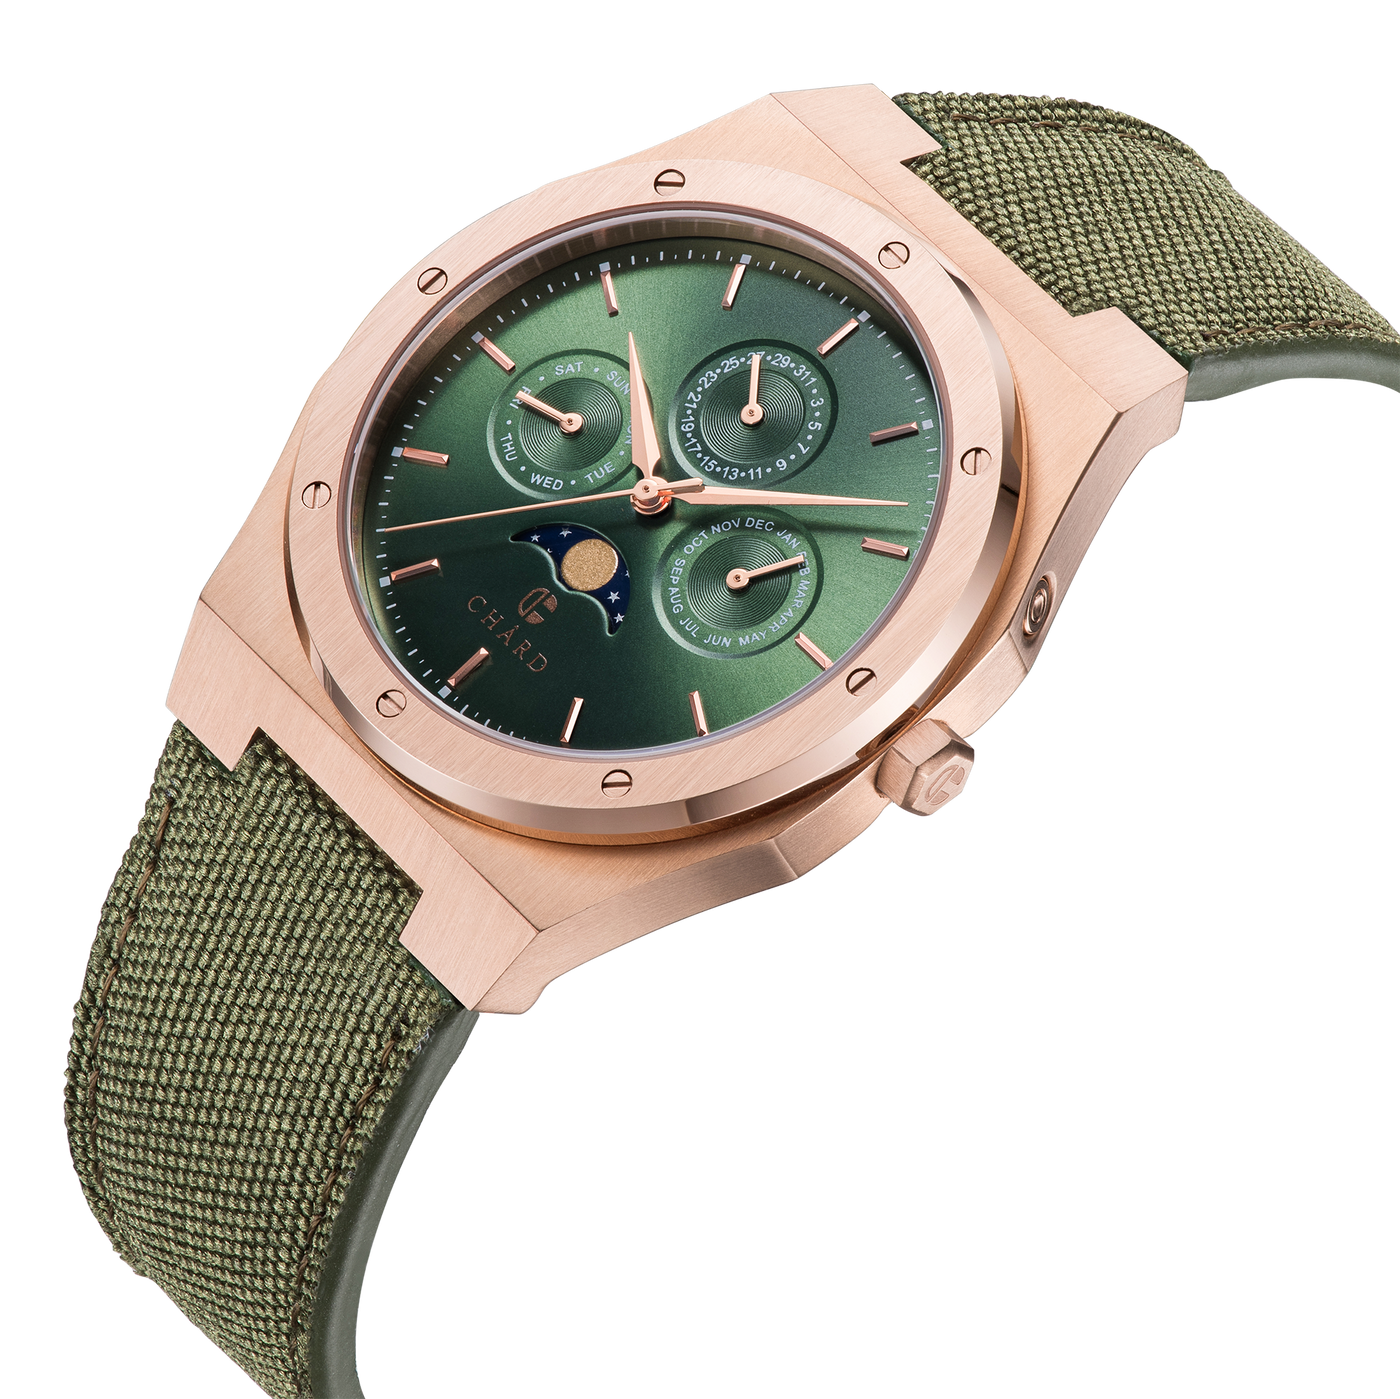 Chârd Alpine Green Watch*